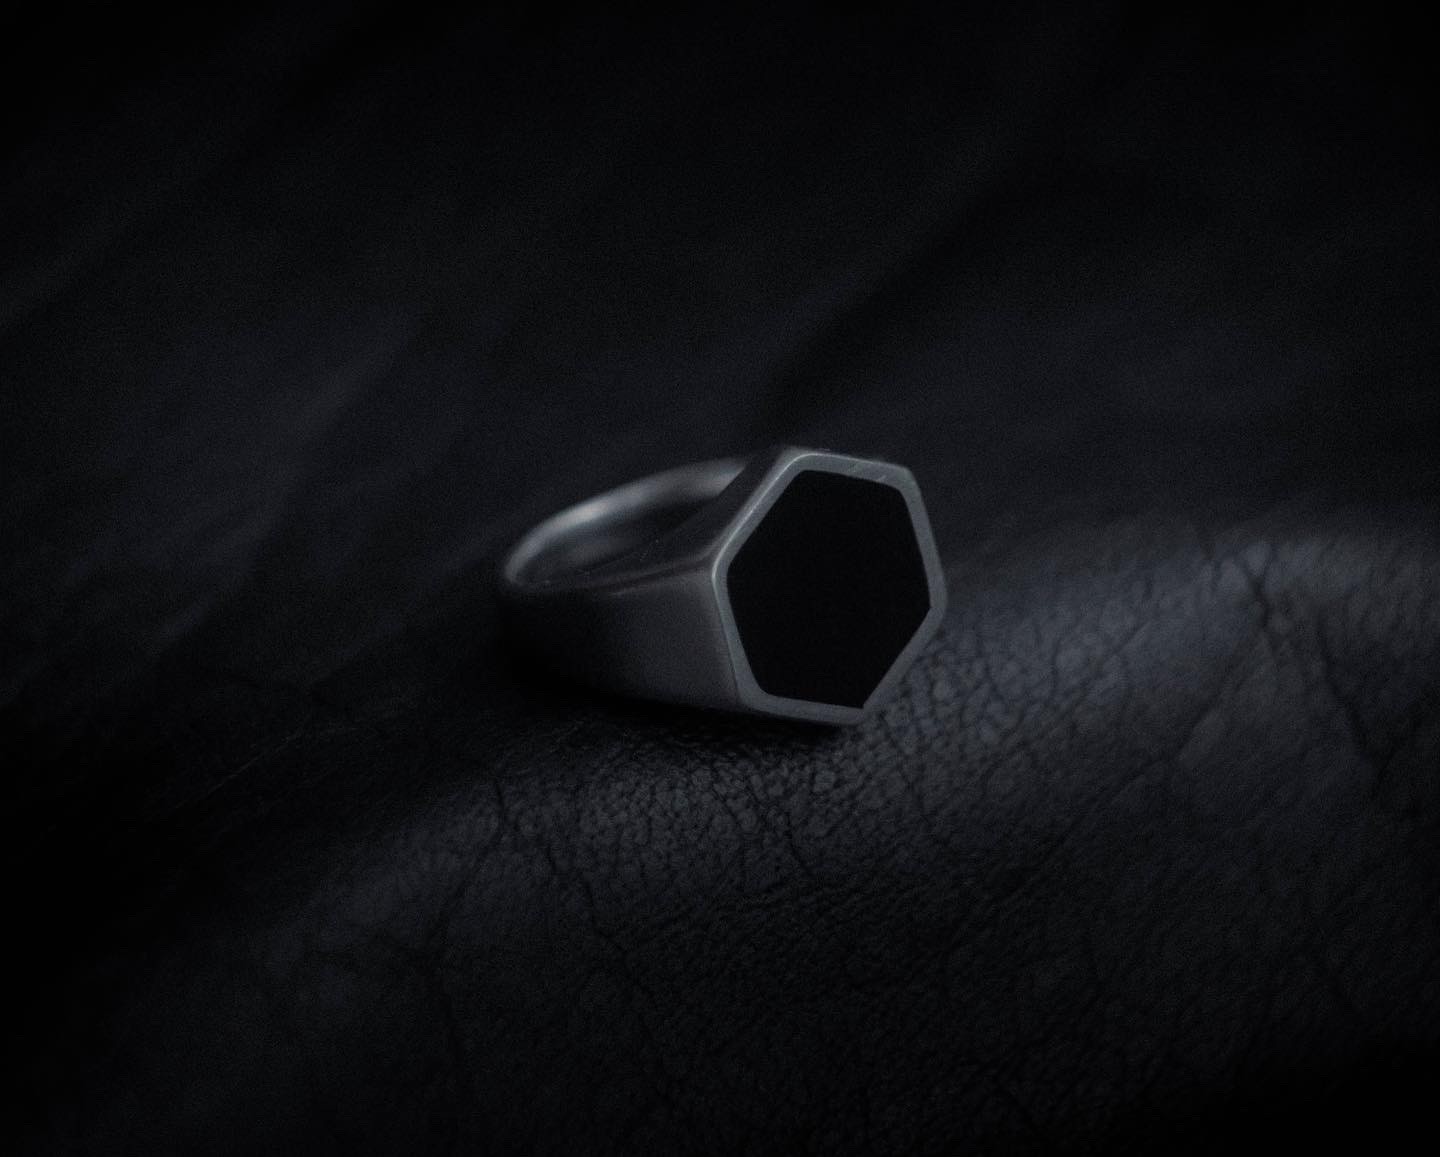 Lotus - hexagon mate ring with enamel element